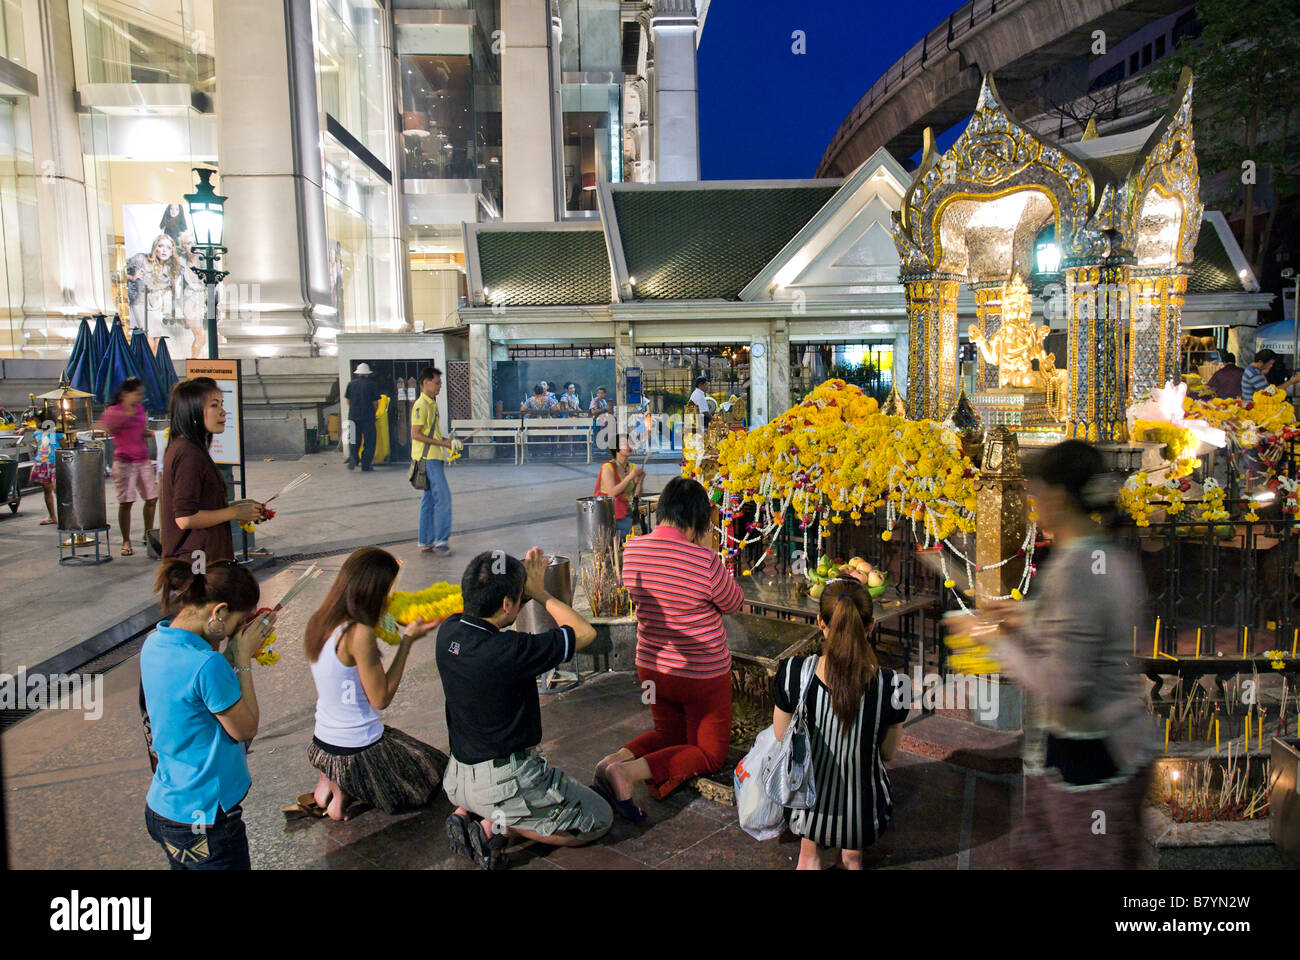 The Erawan buddhist shrine on the forecourt of the upmarket Erawan shopping mall Pathumwan district in central Bangkok Thailand Stock Photo